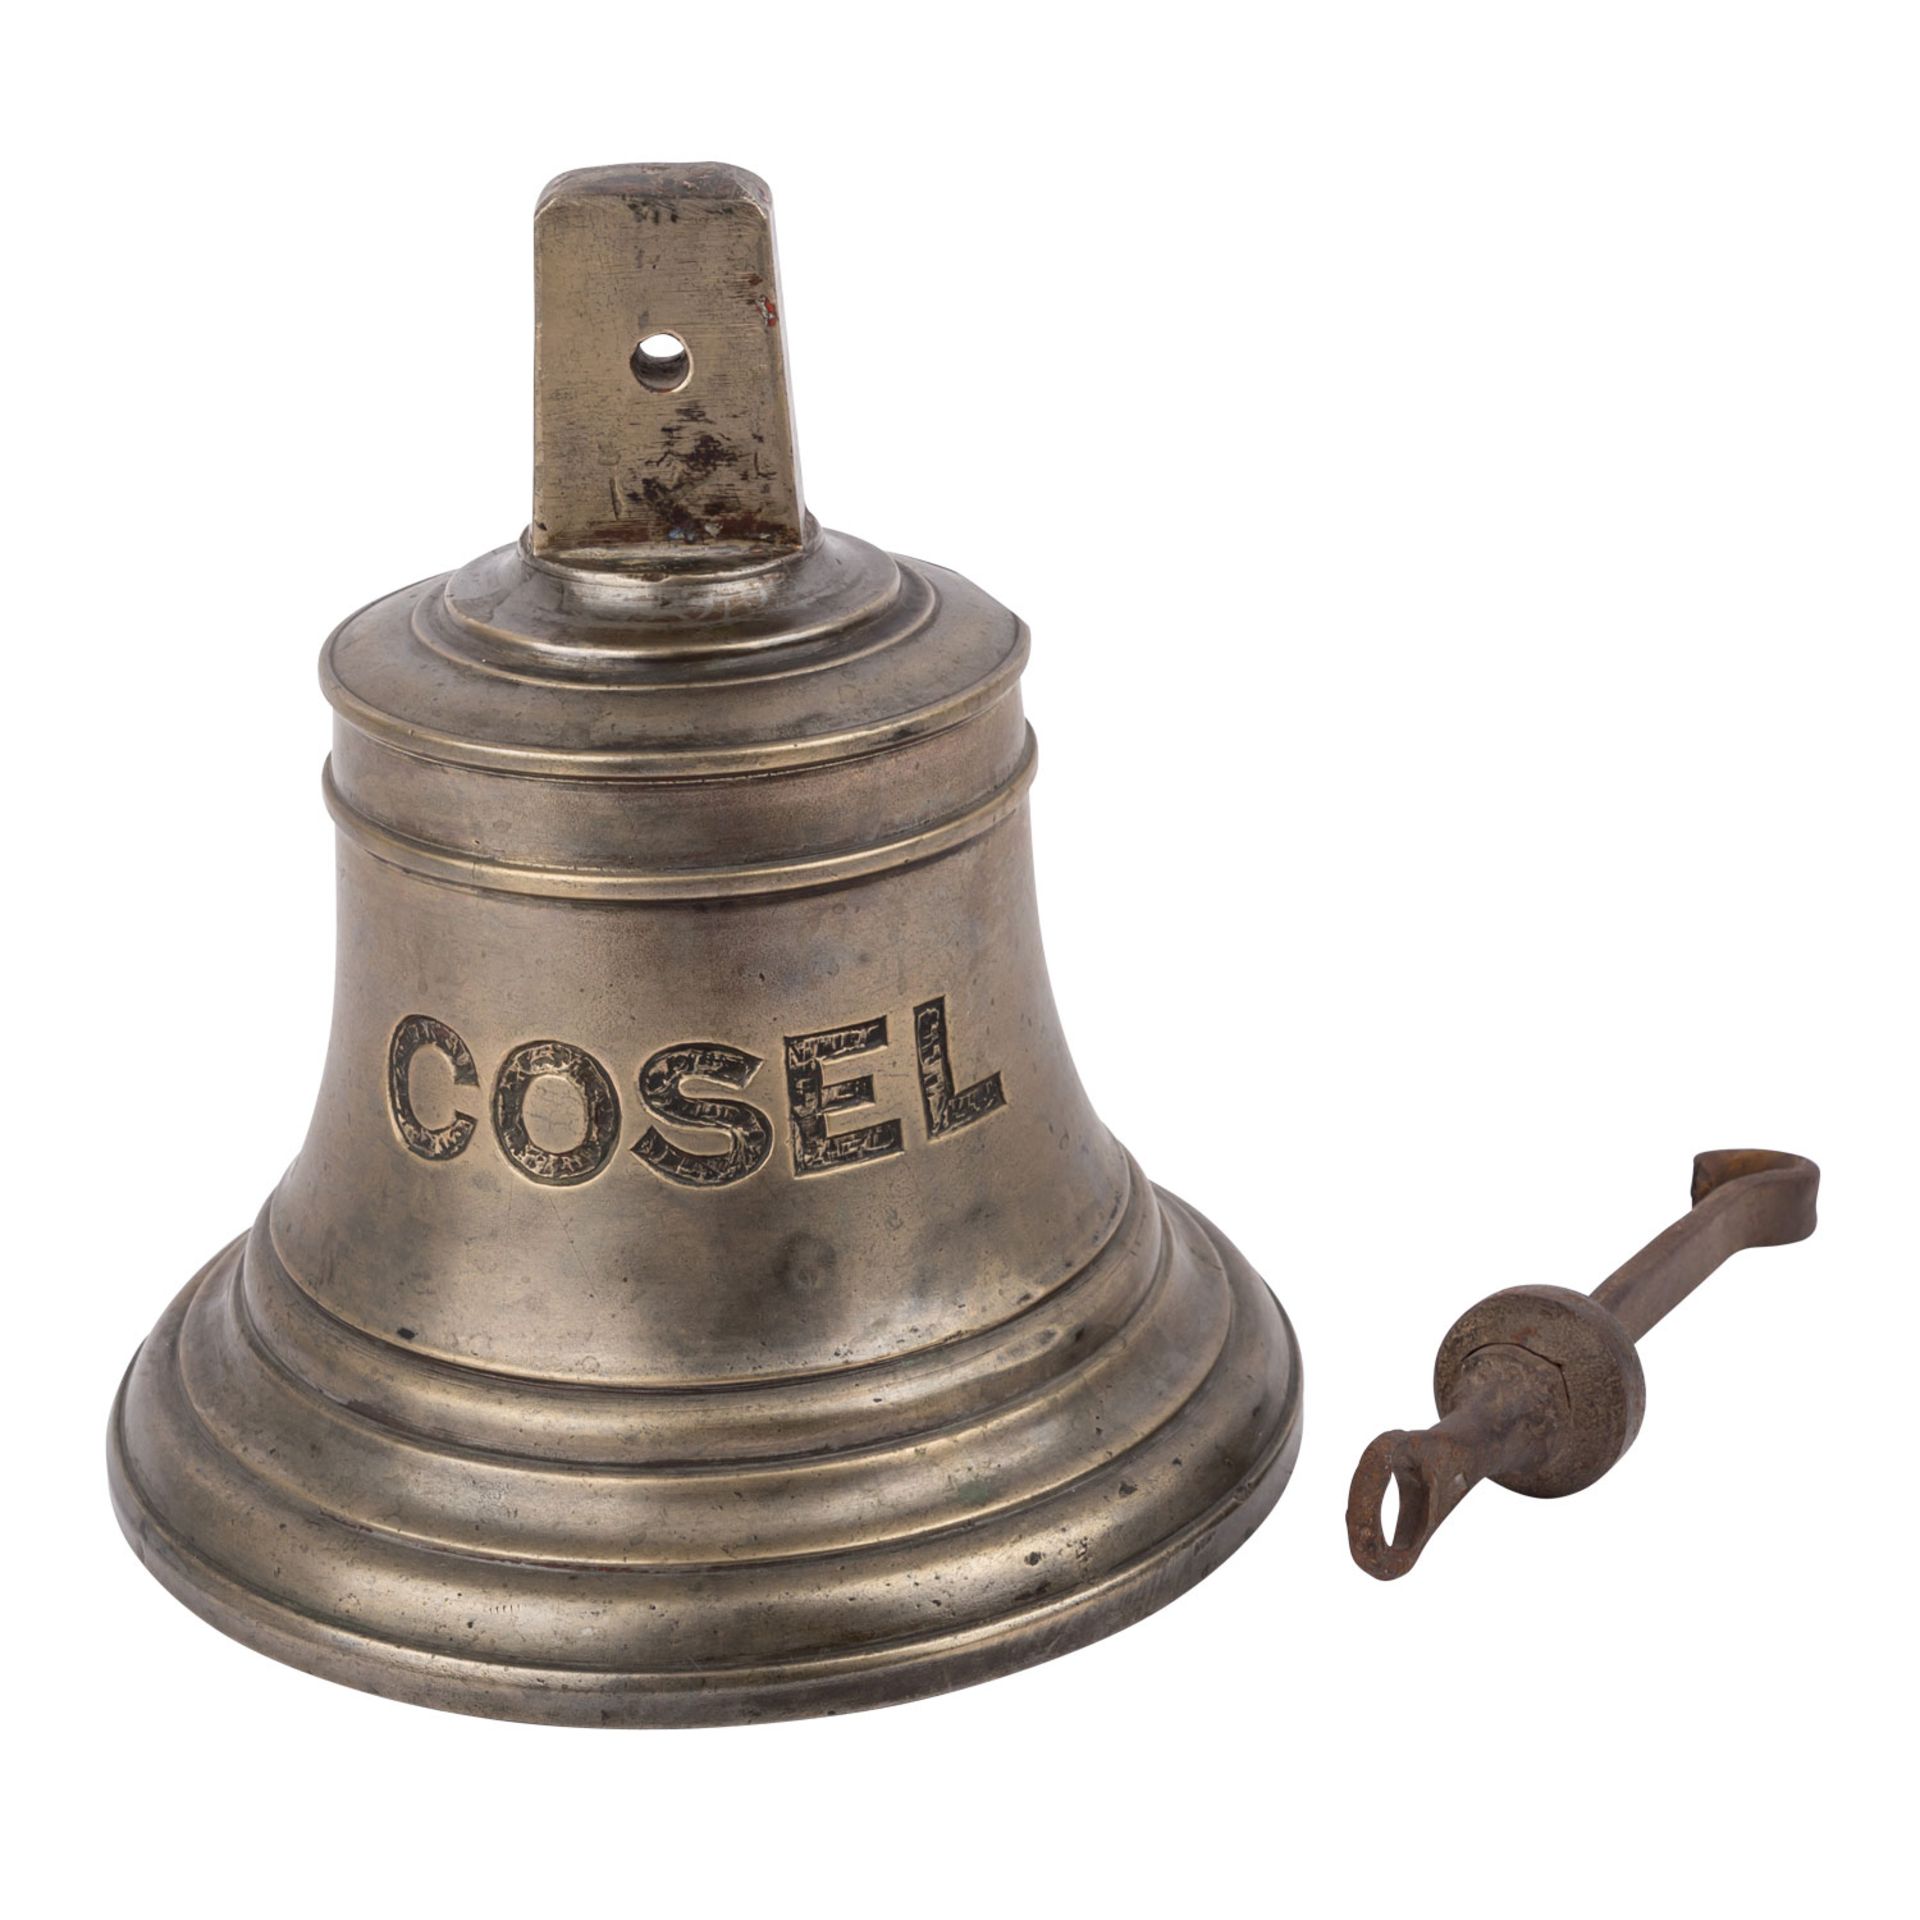 SCHIFFSGLOCKE “COSEL”Polen, 20.Jh., schwere Bronzeglocke mit Aufschrift „COSEL“, Glöppel zum